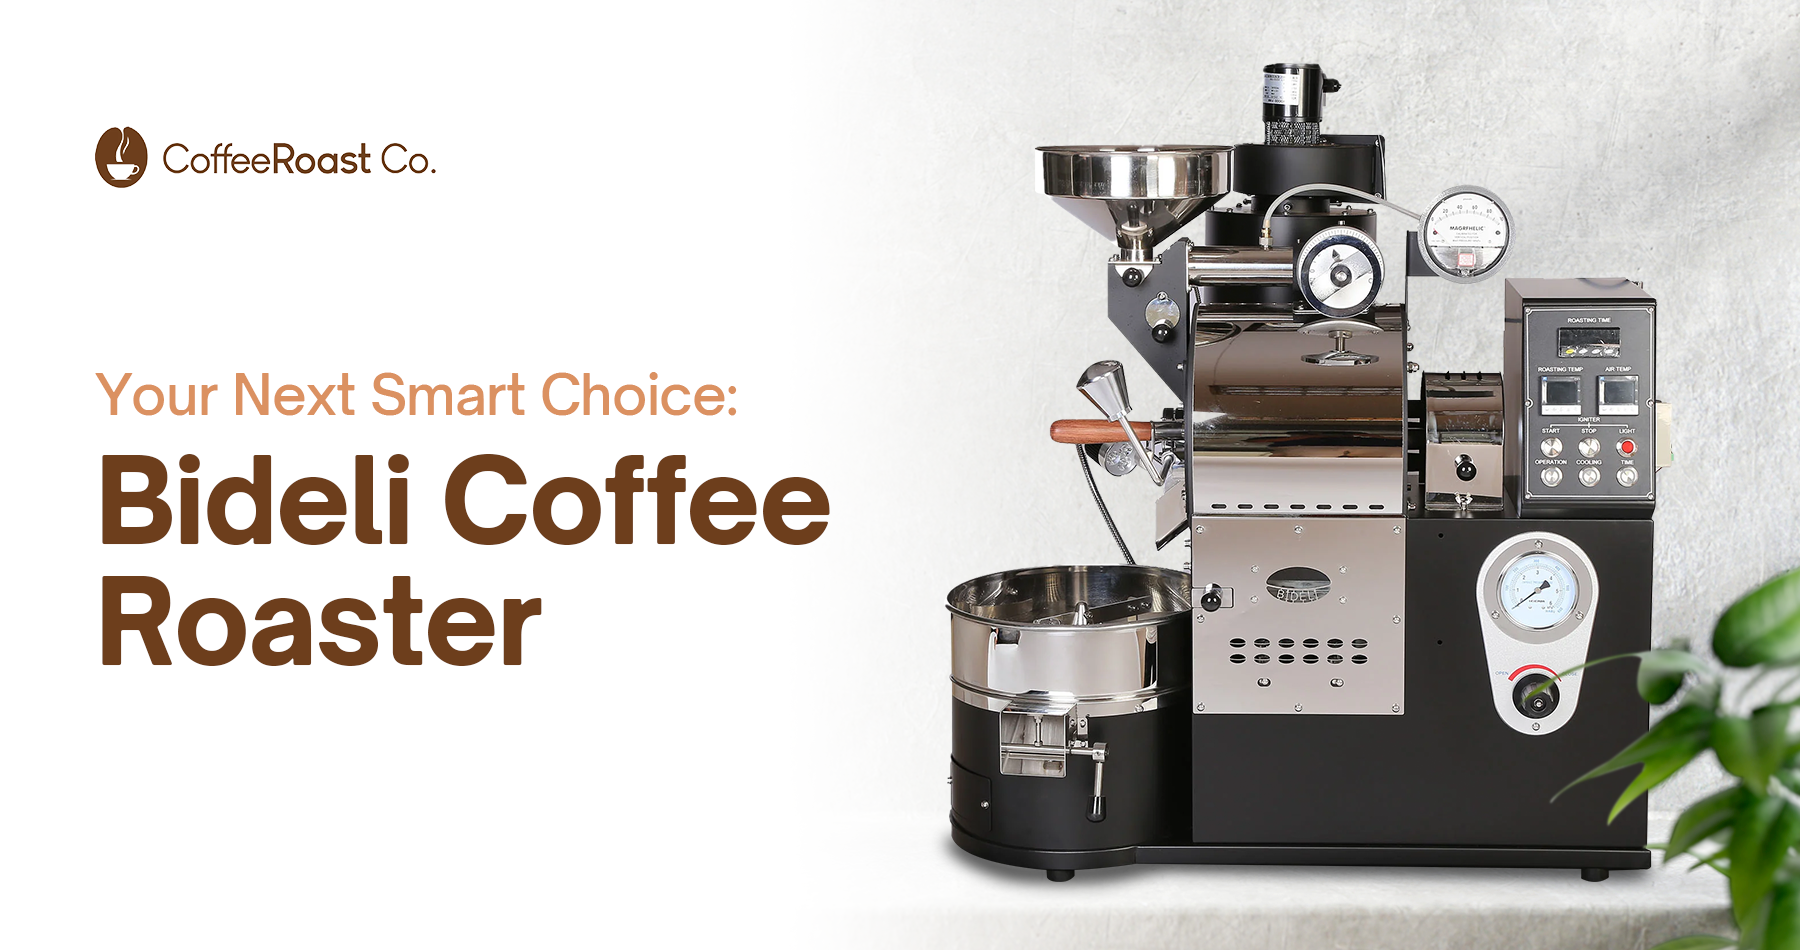 Your Next Smart Choice: Bideli Coffee Roaster